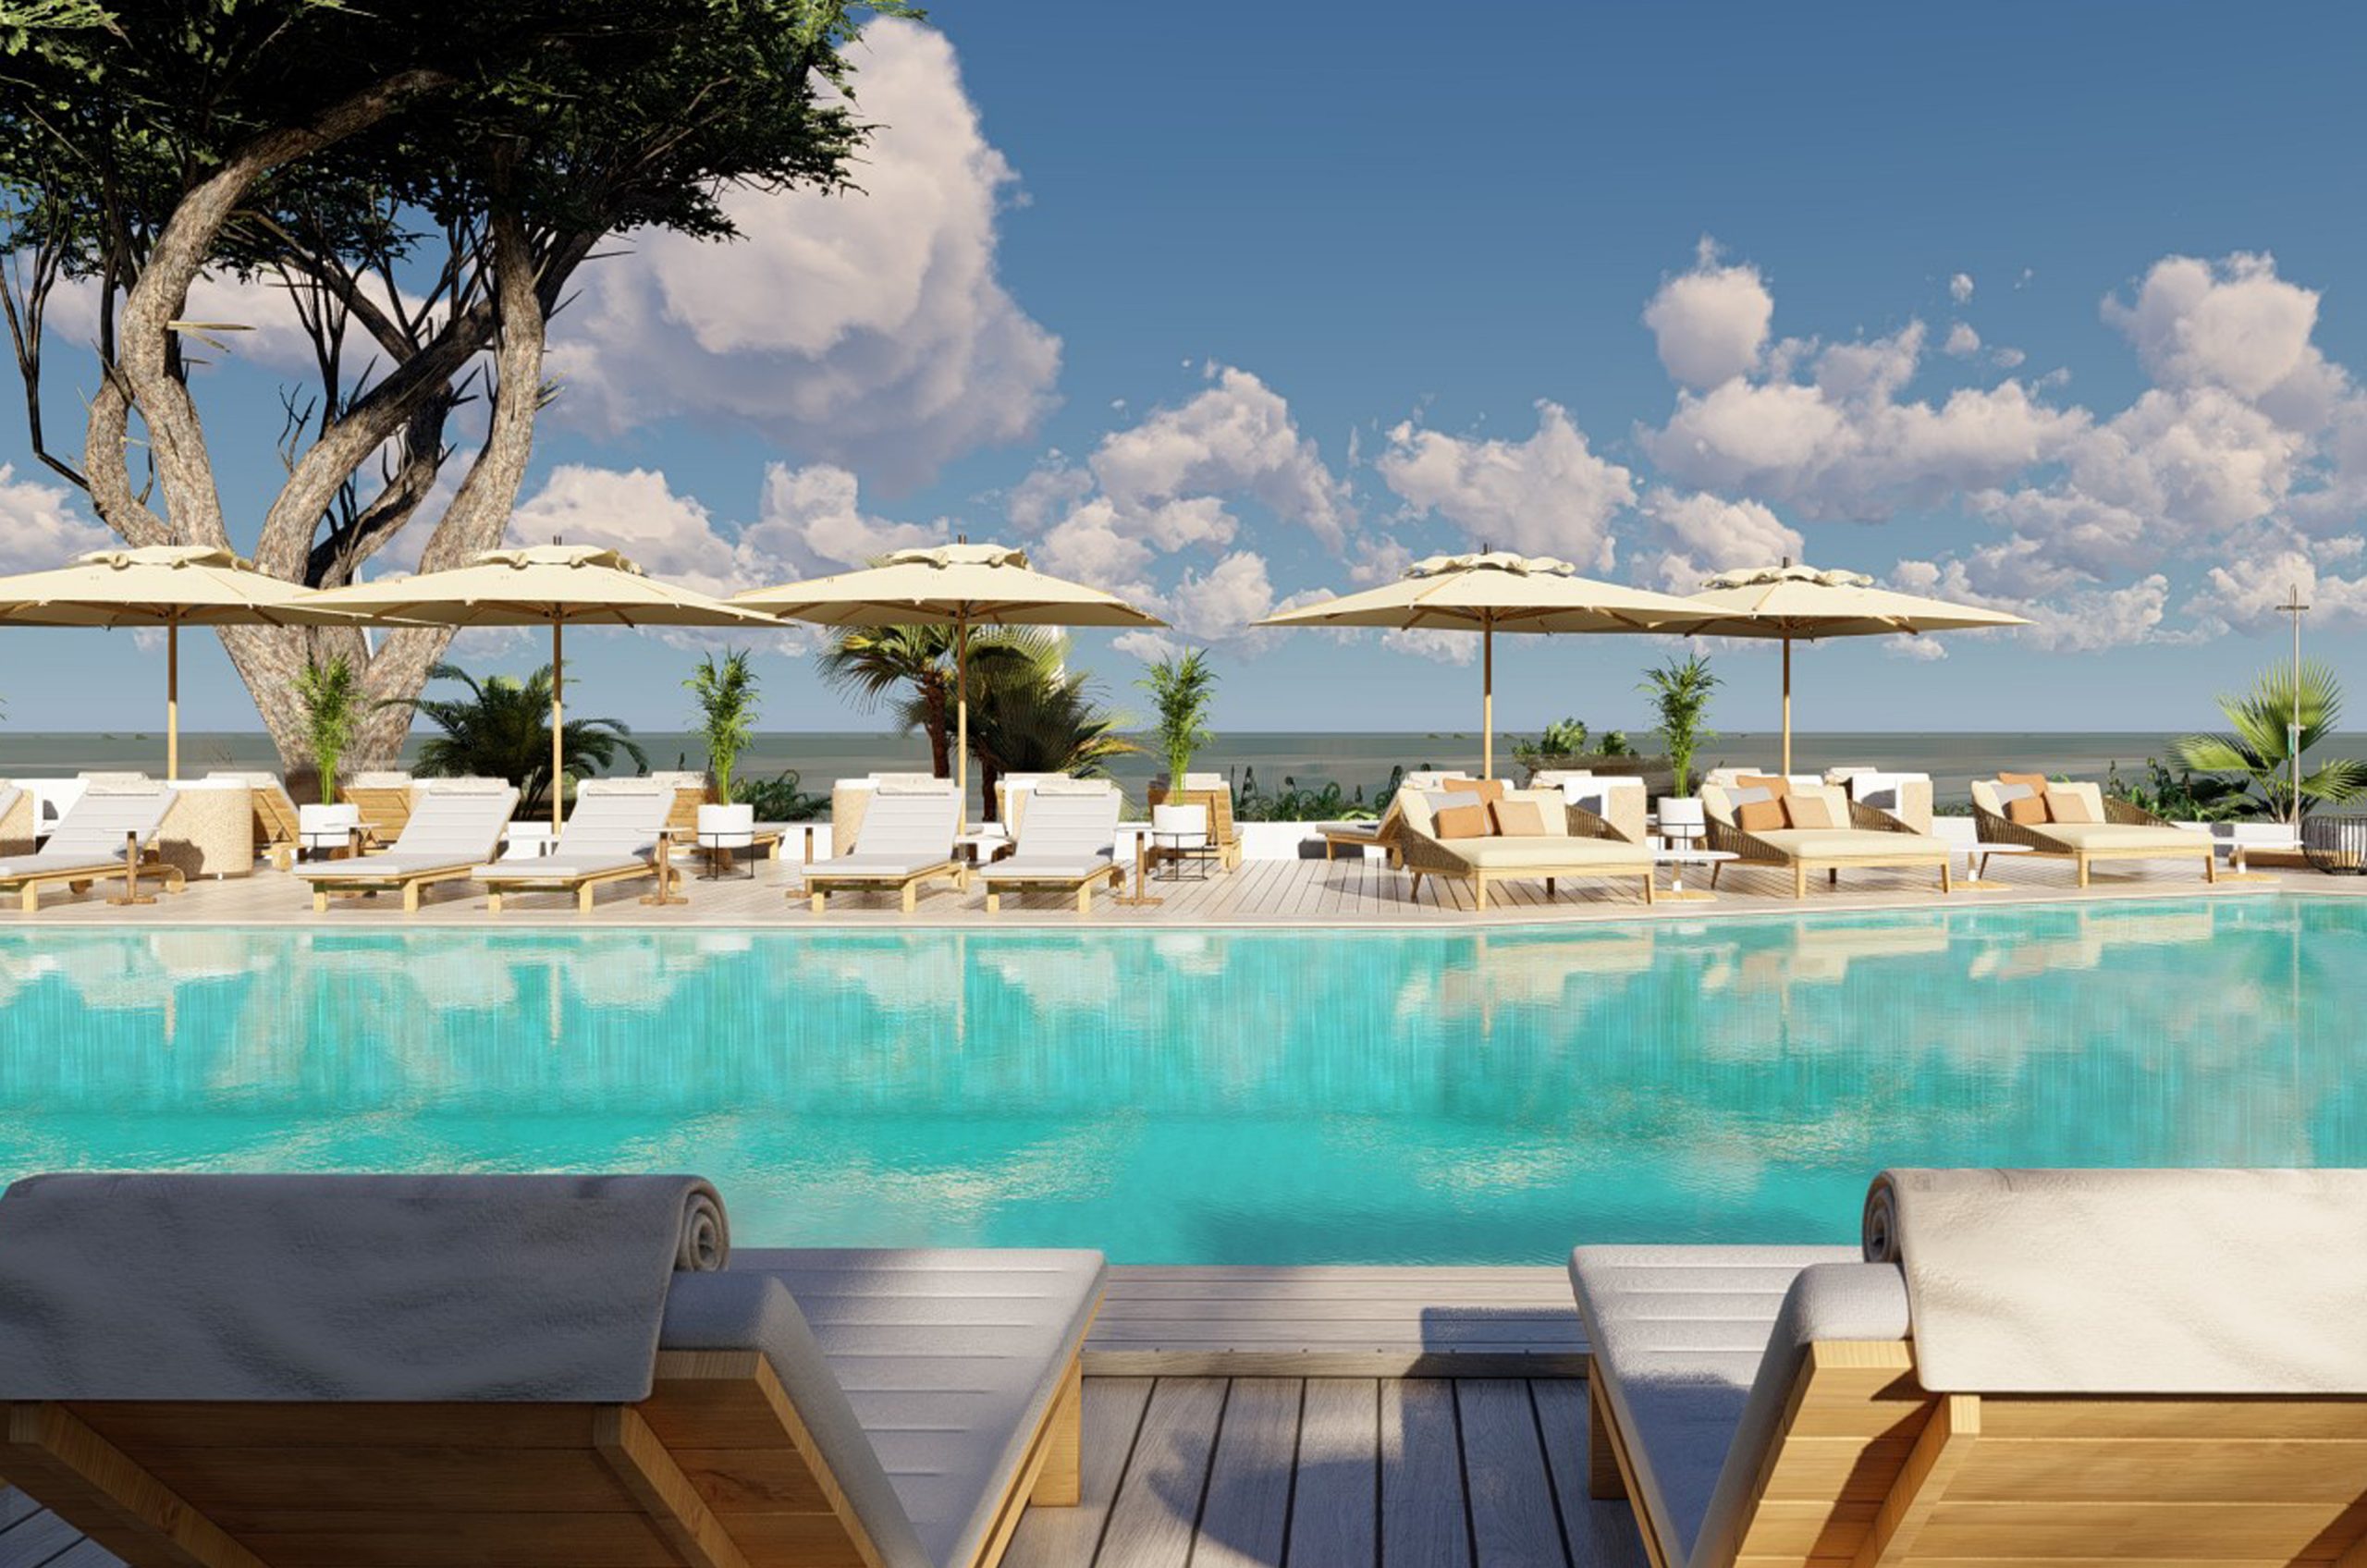 La piscina del Hotel Riomar / Foto: Marriott International